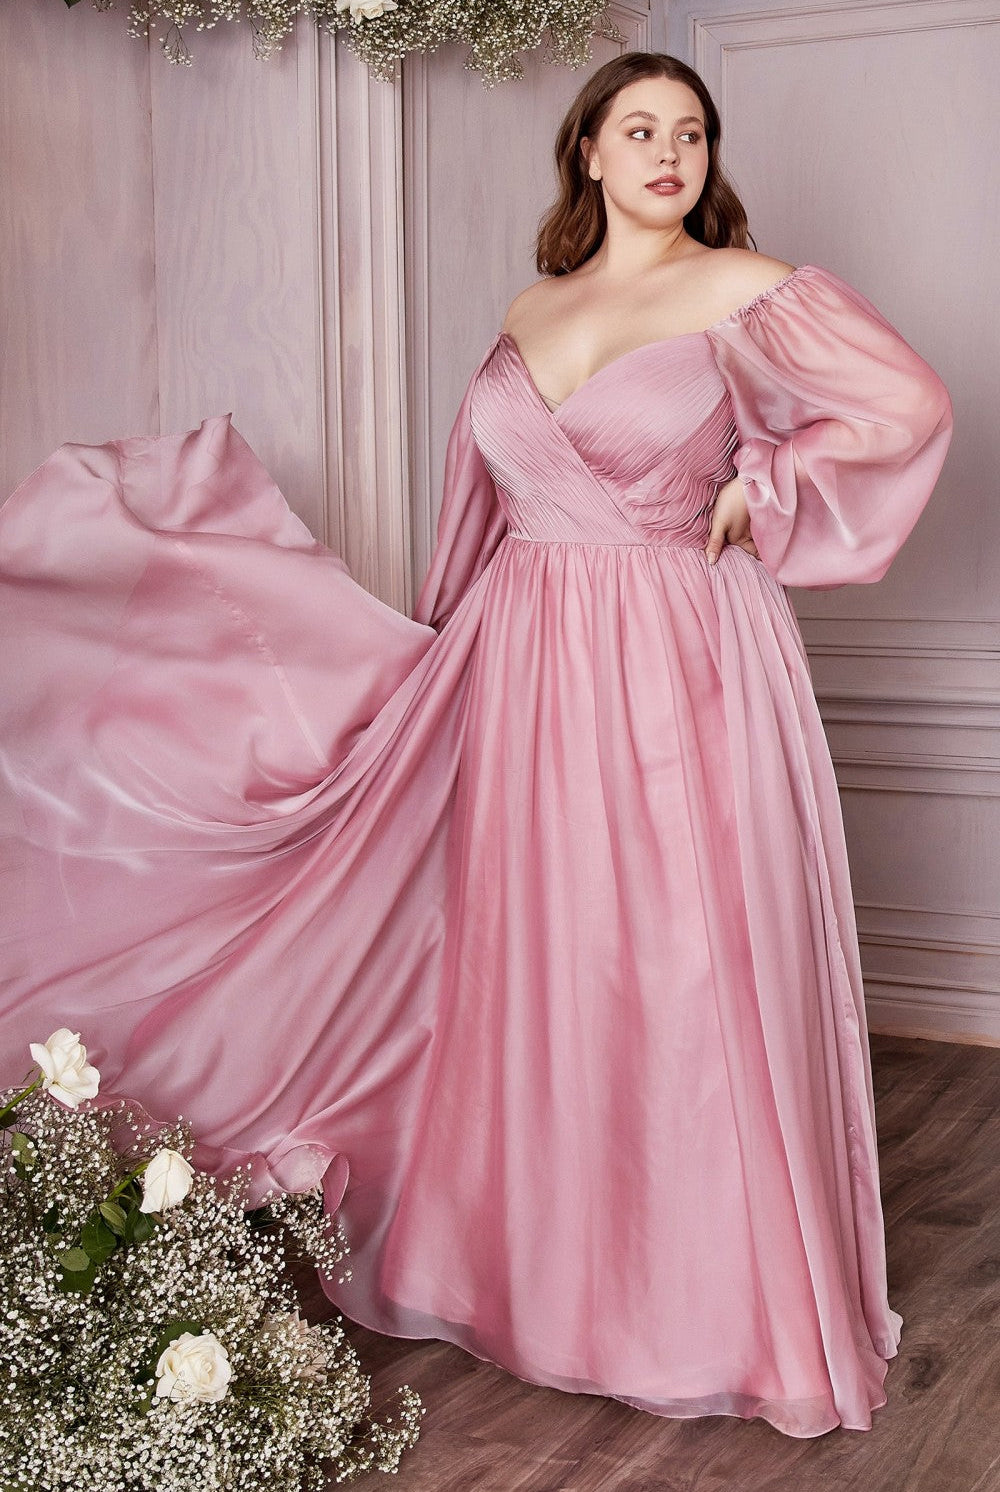 Classic Evening & Prom Dresses Long Sleeves Bodice A-line Chiffon Gown Plus Size Luxury Royal Style CDCD243C Sale-Prom Dress-smcfashion.com